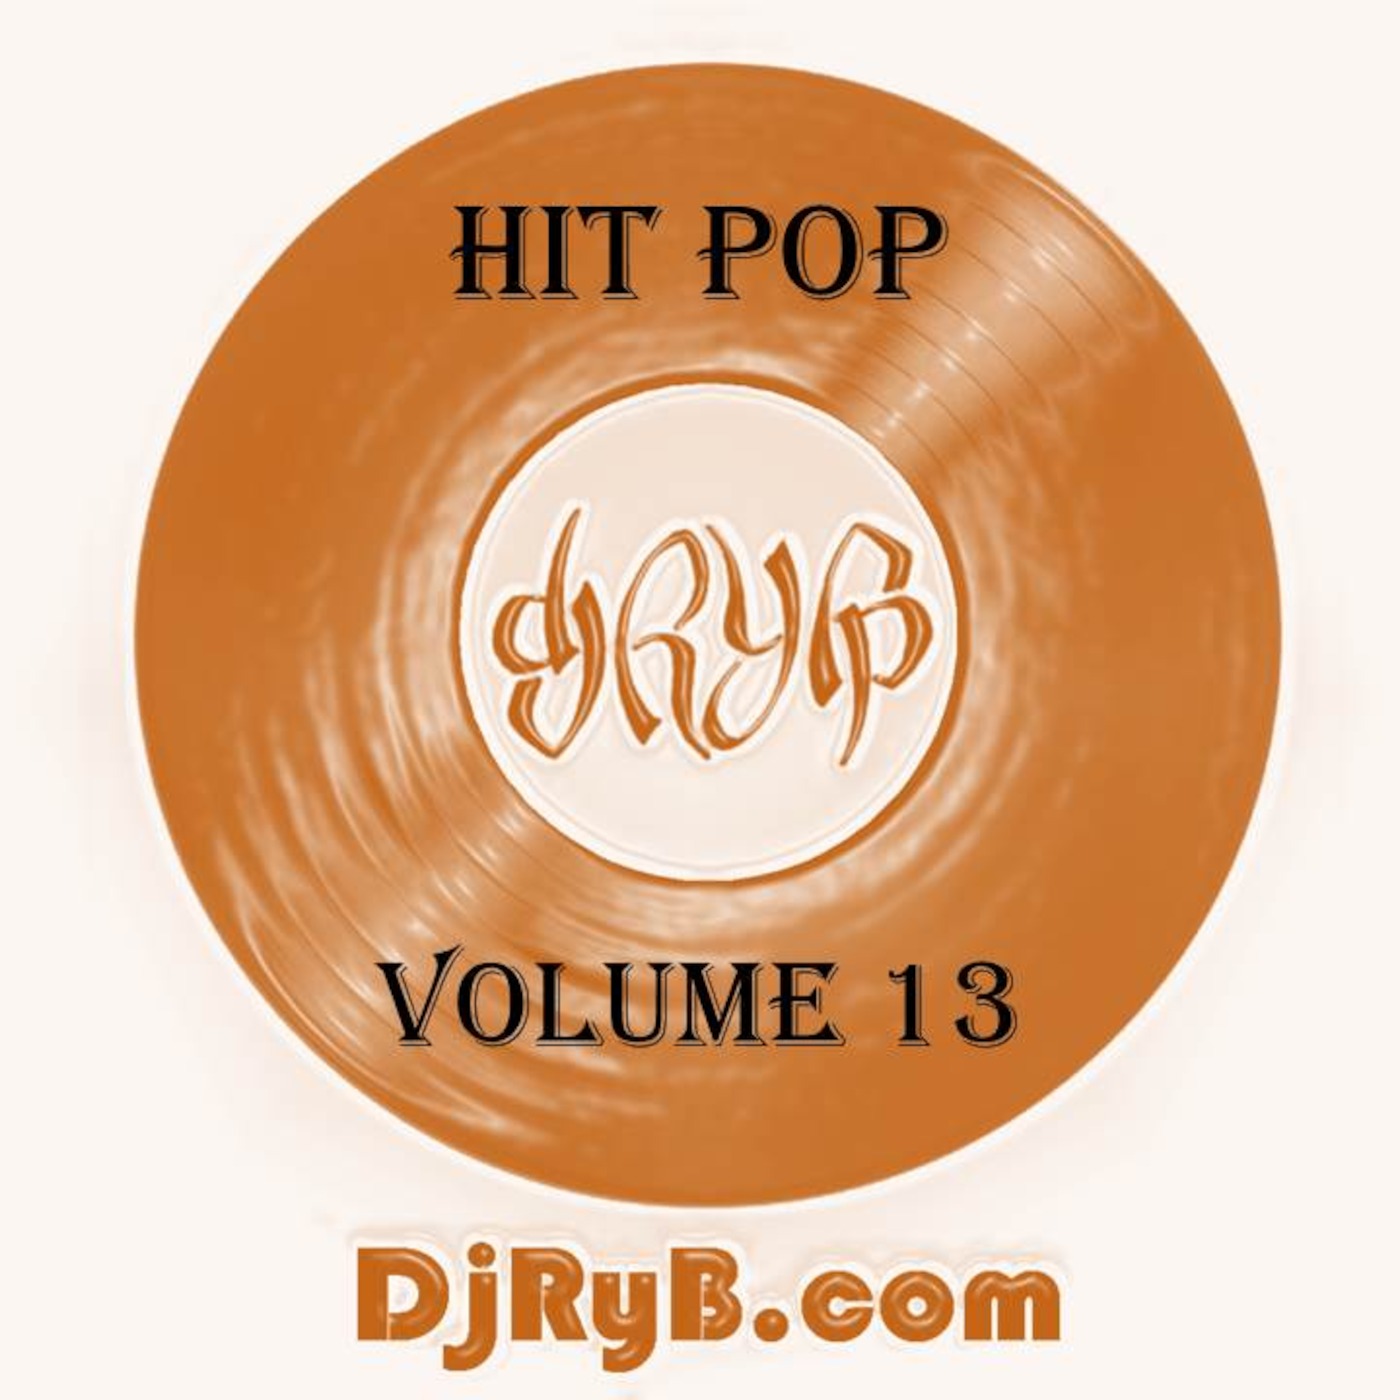 Hit Pop Volume 13 - Dj RyB